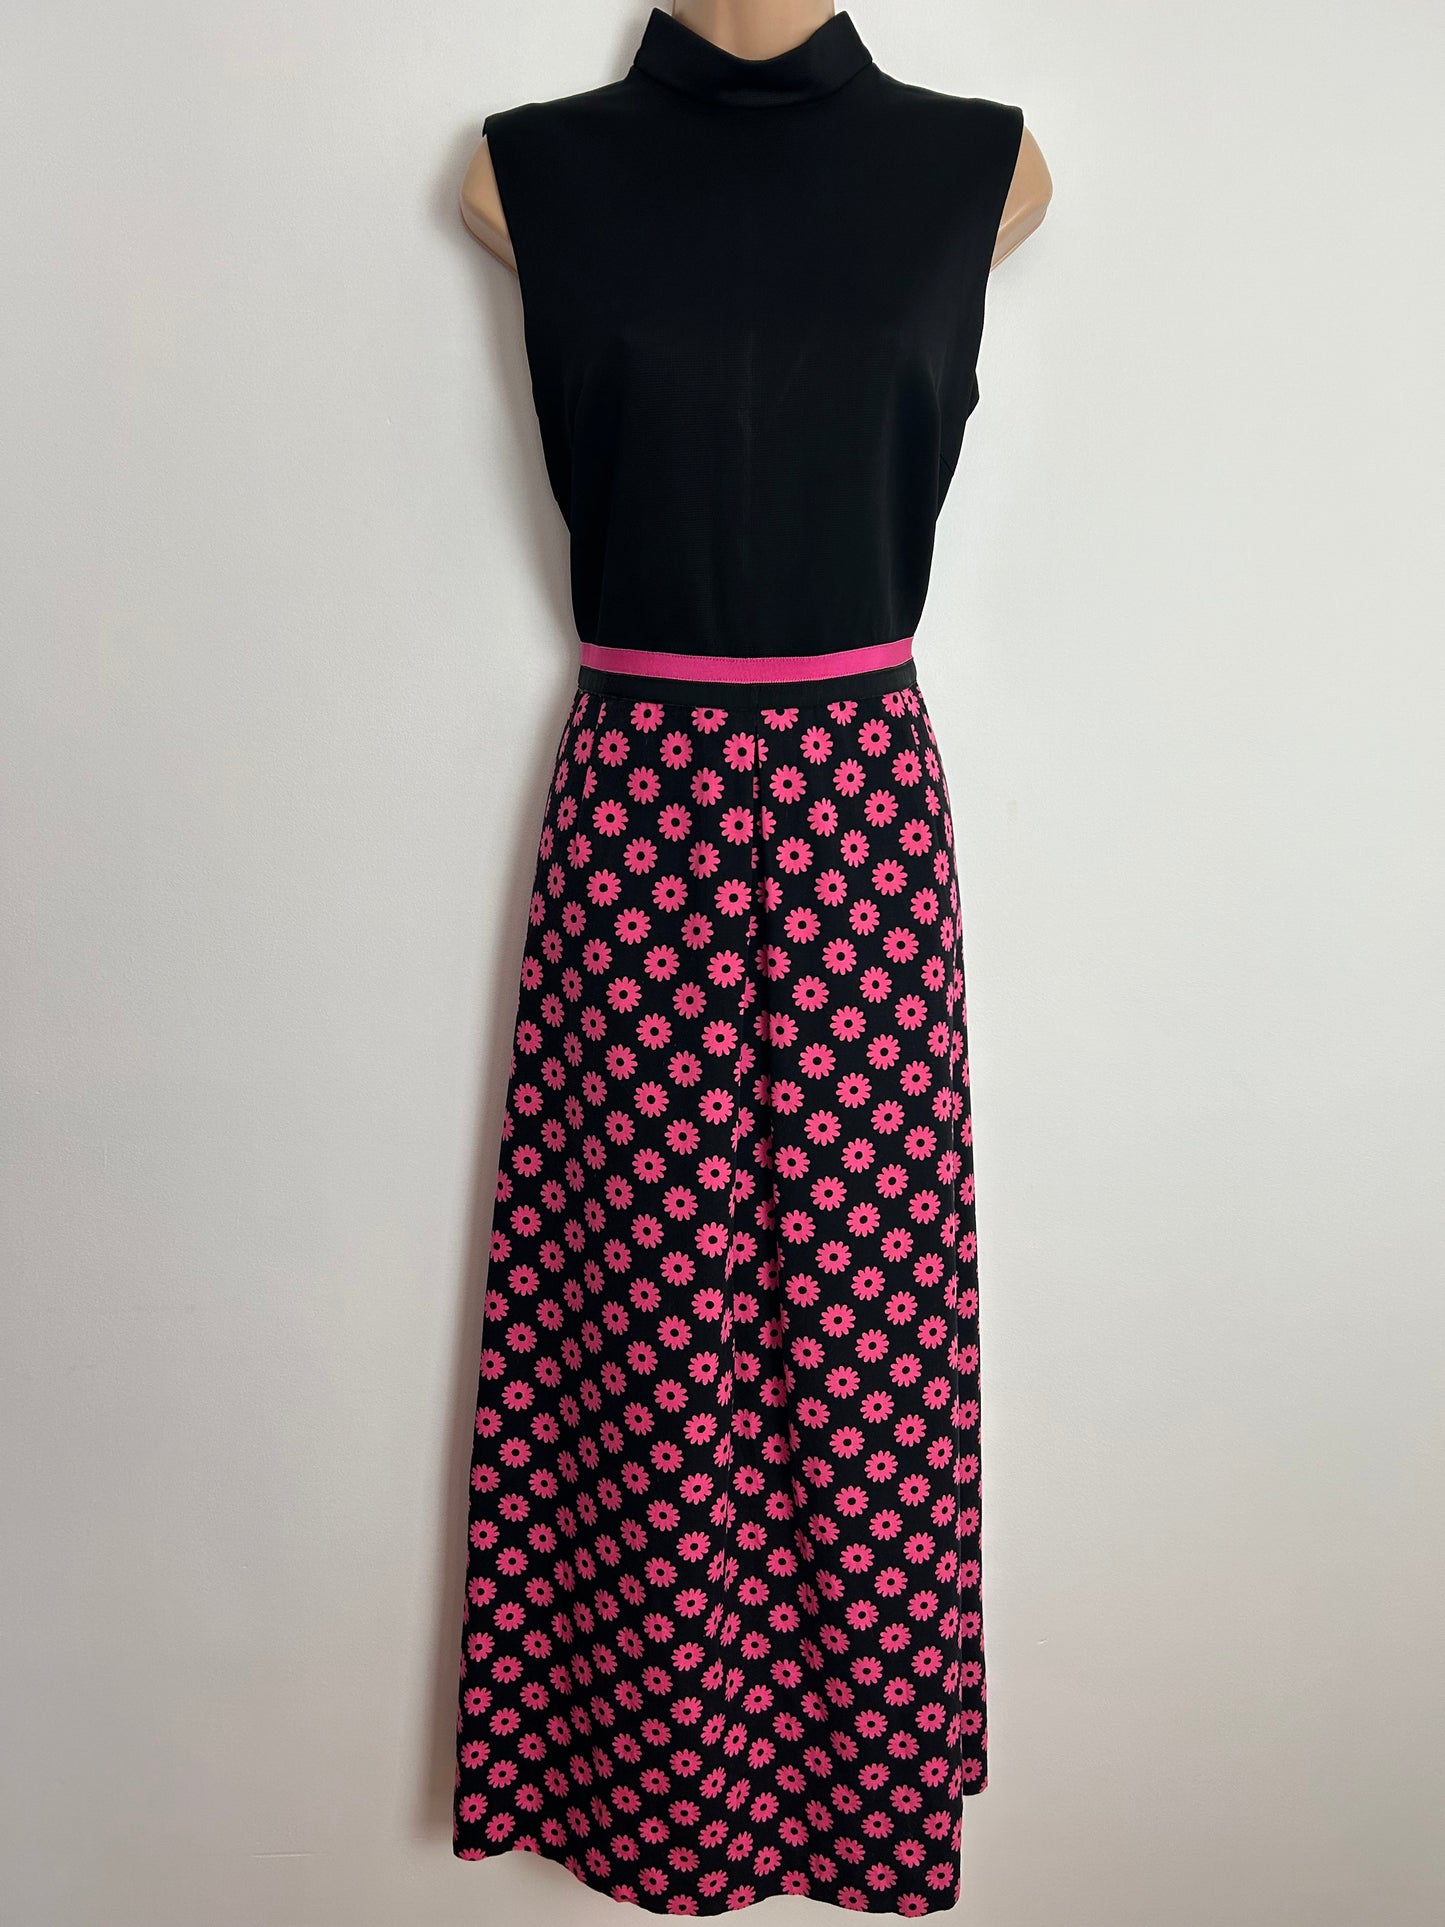 Vintage 1970s UK Size 10 Black & Pink Daisy Floral Sleeveless Boho Maxi Dress by DONNA GAY